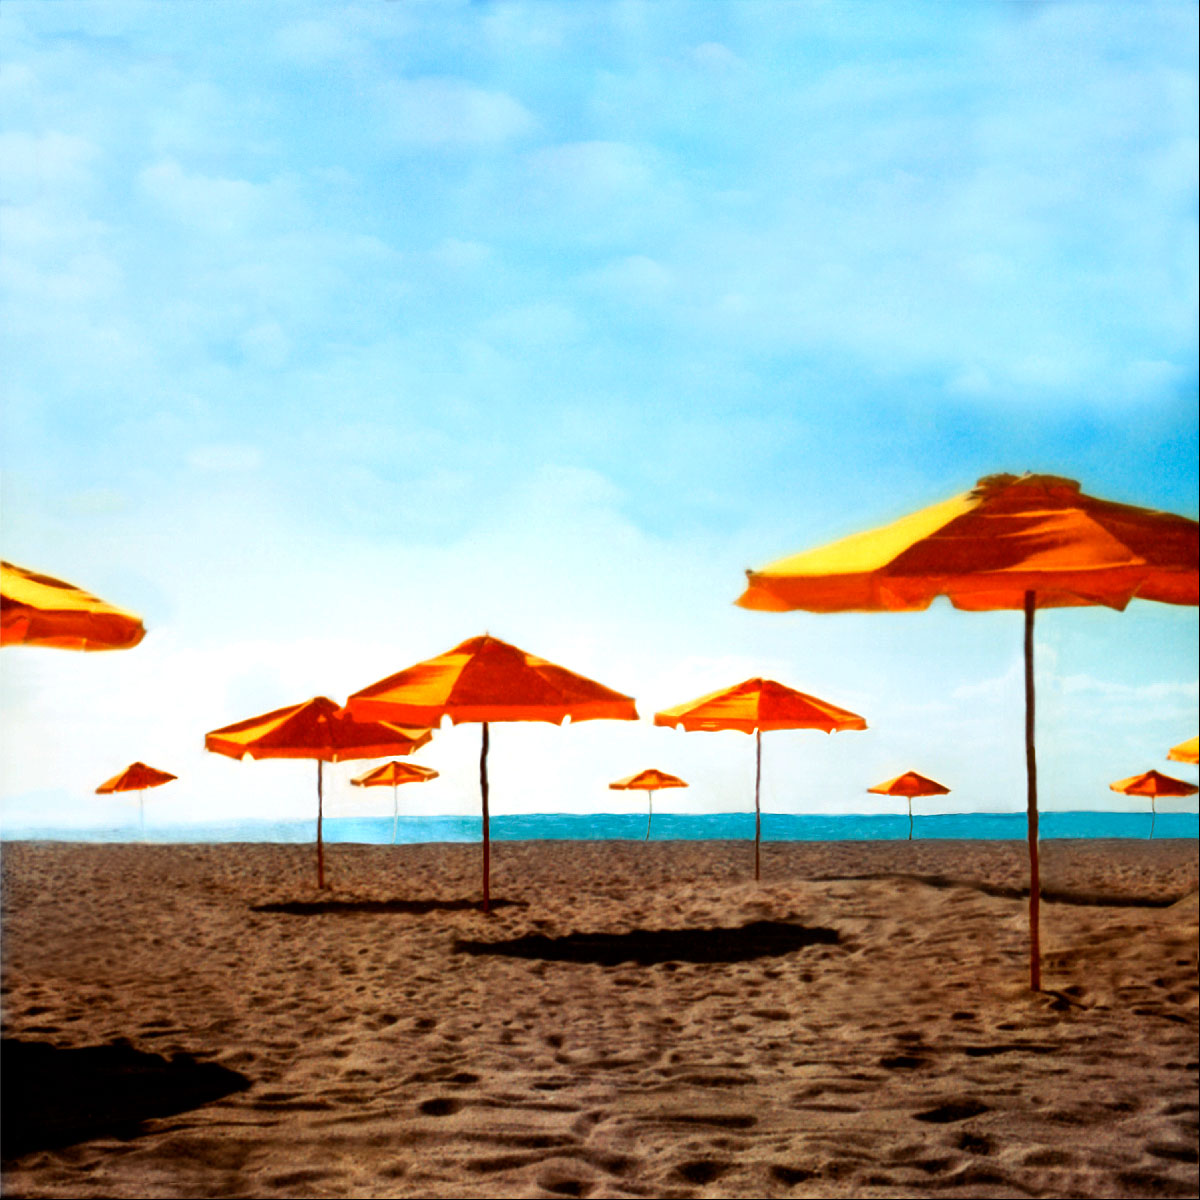 "Just Umbrellas" <br>Orange Beach Umbrellas, Sky, Sand and Water, Miami Beach, FL